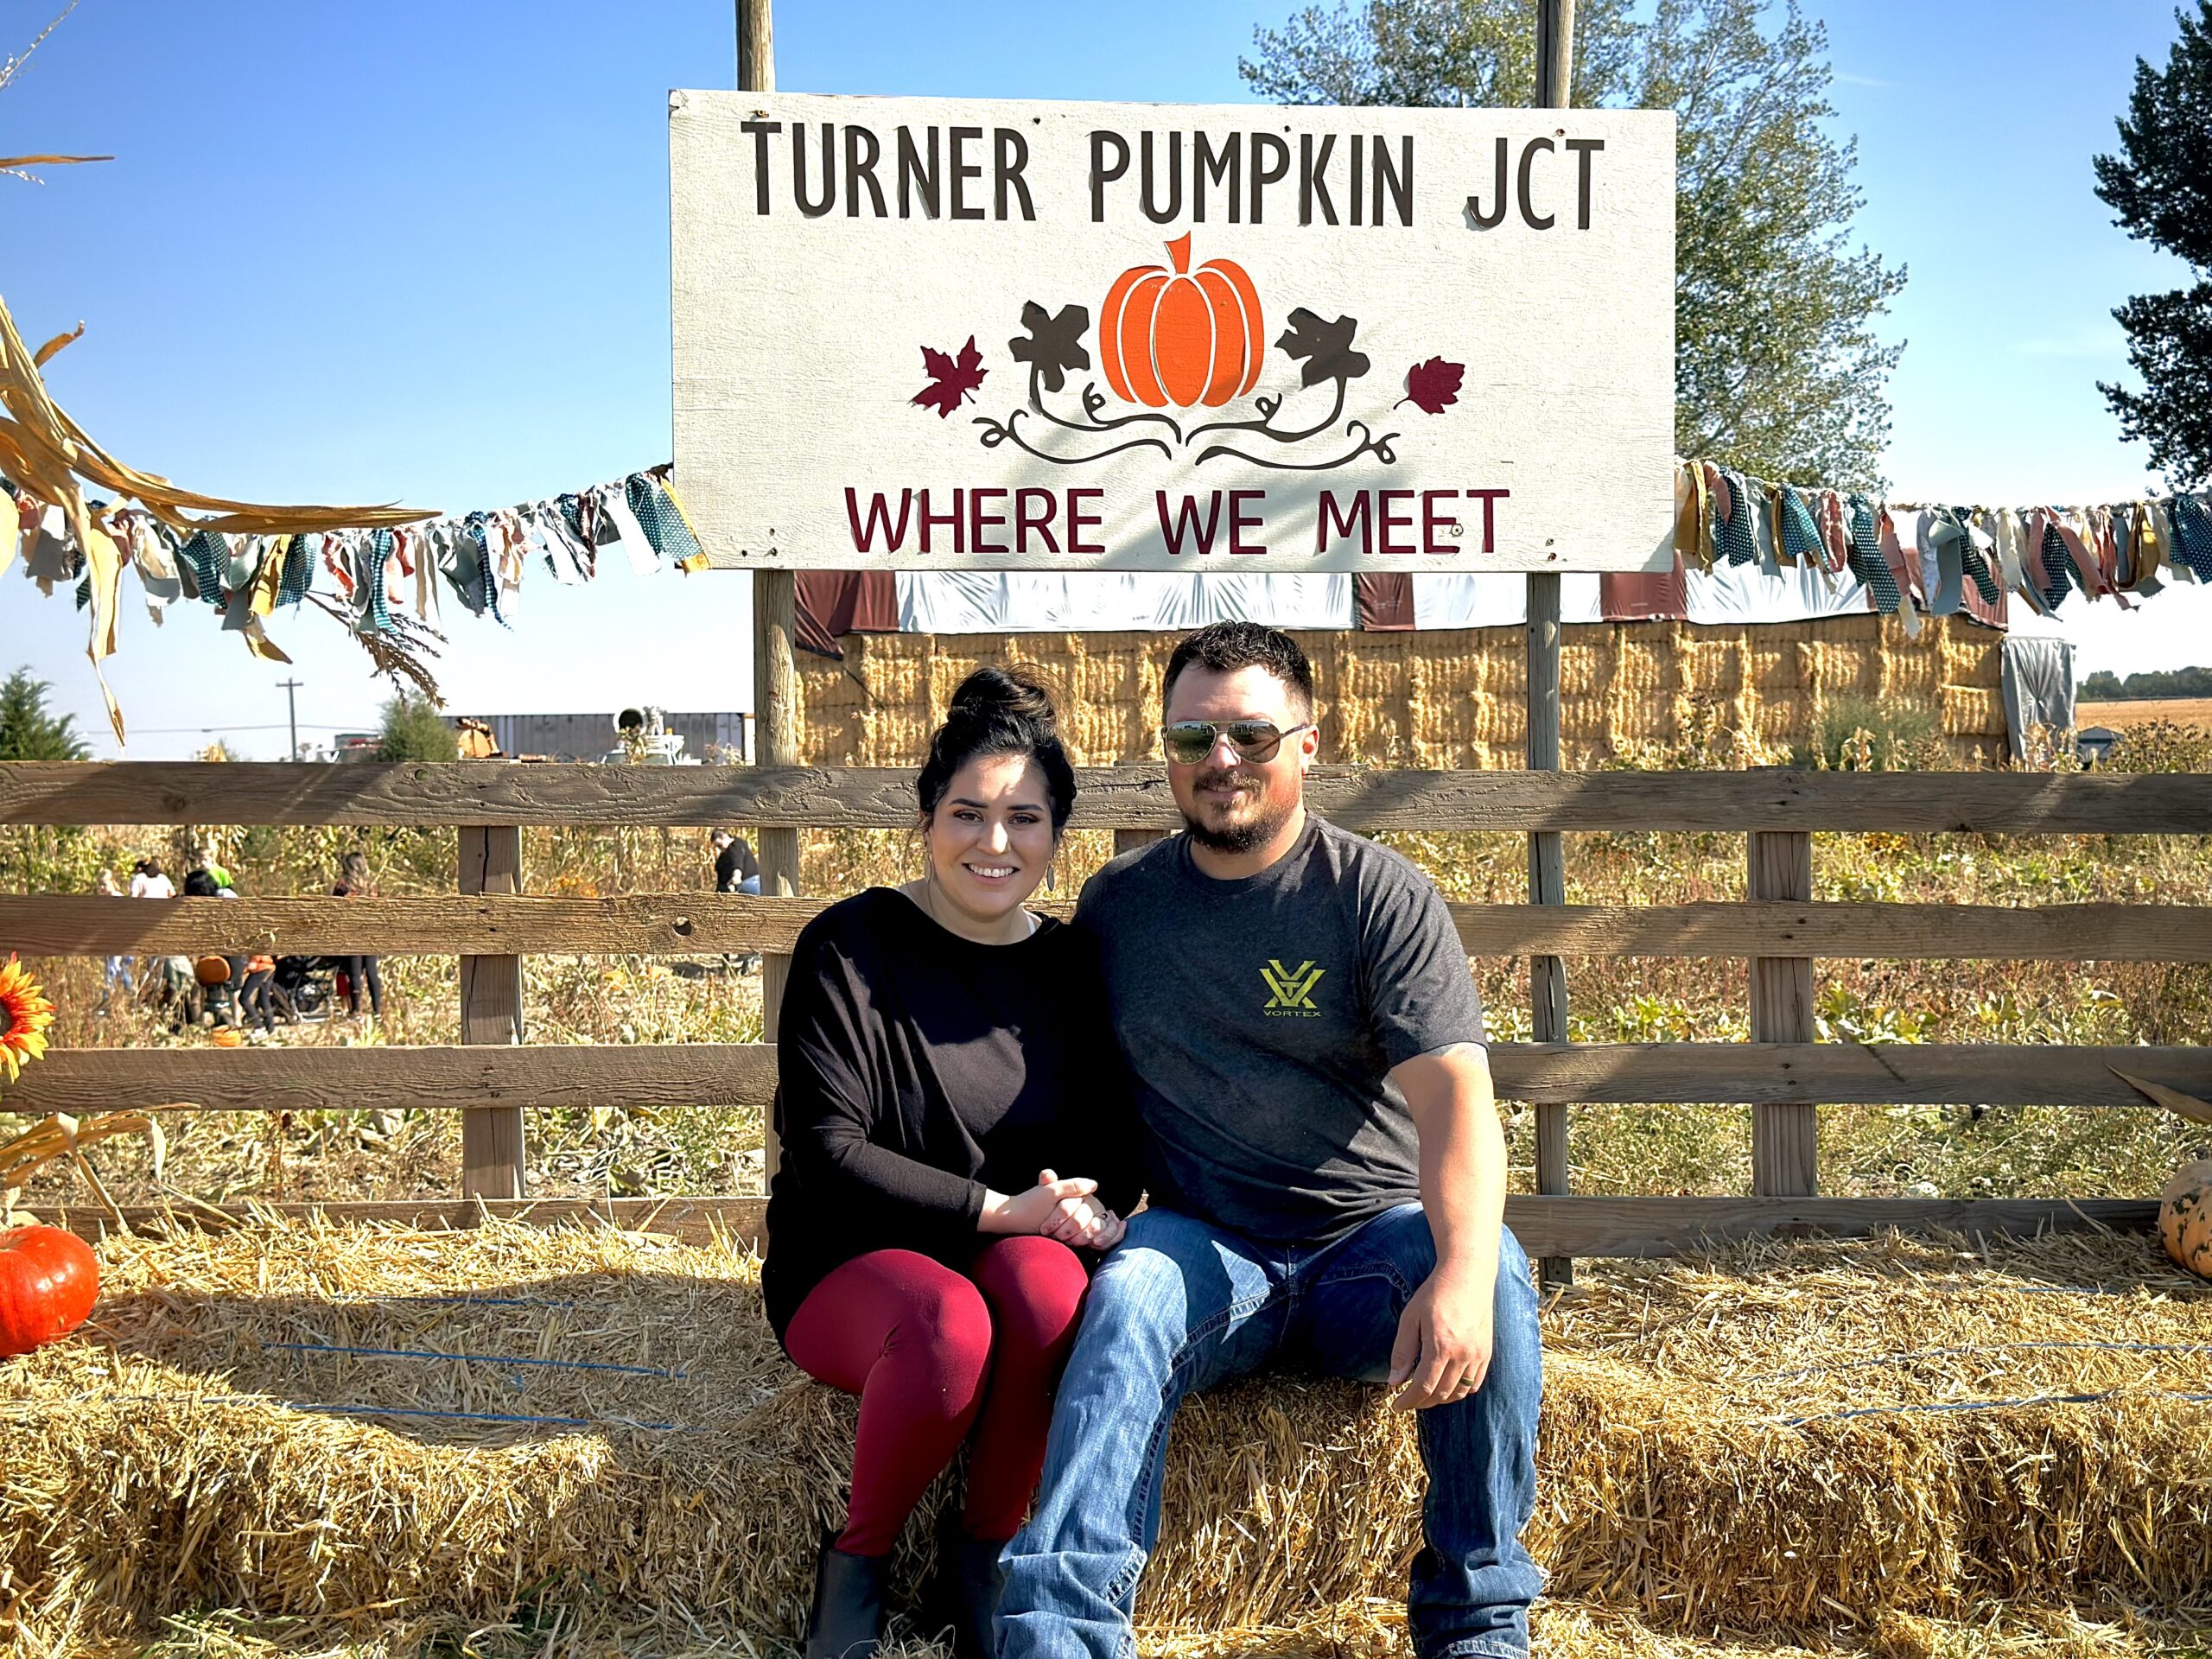 Turner pumpkin junction -069